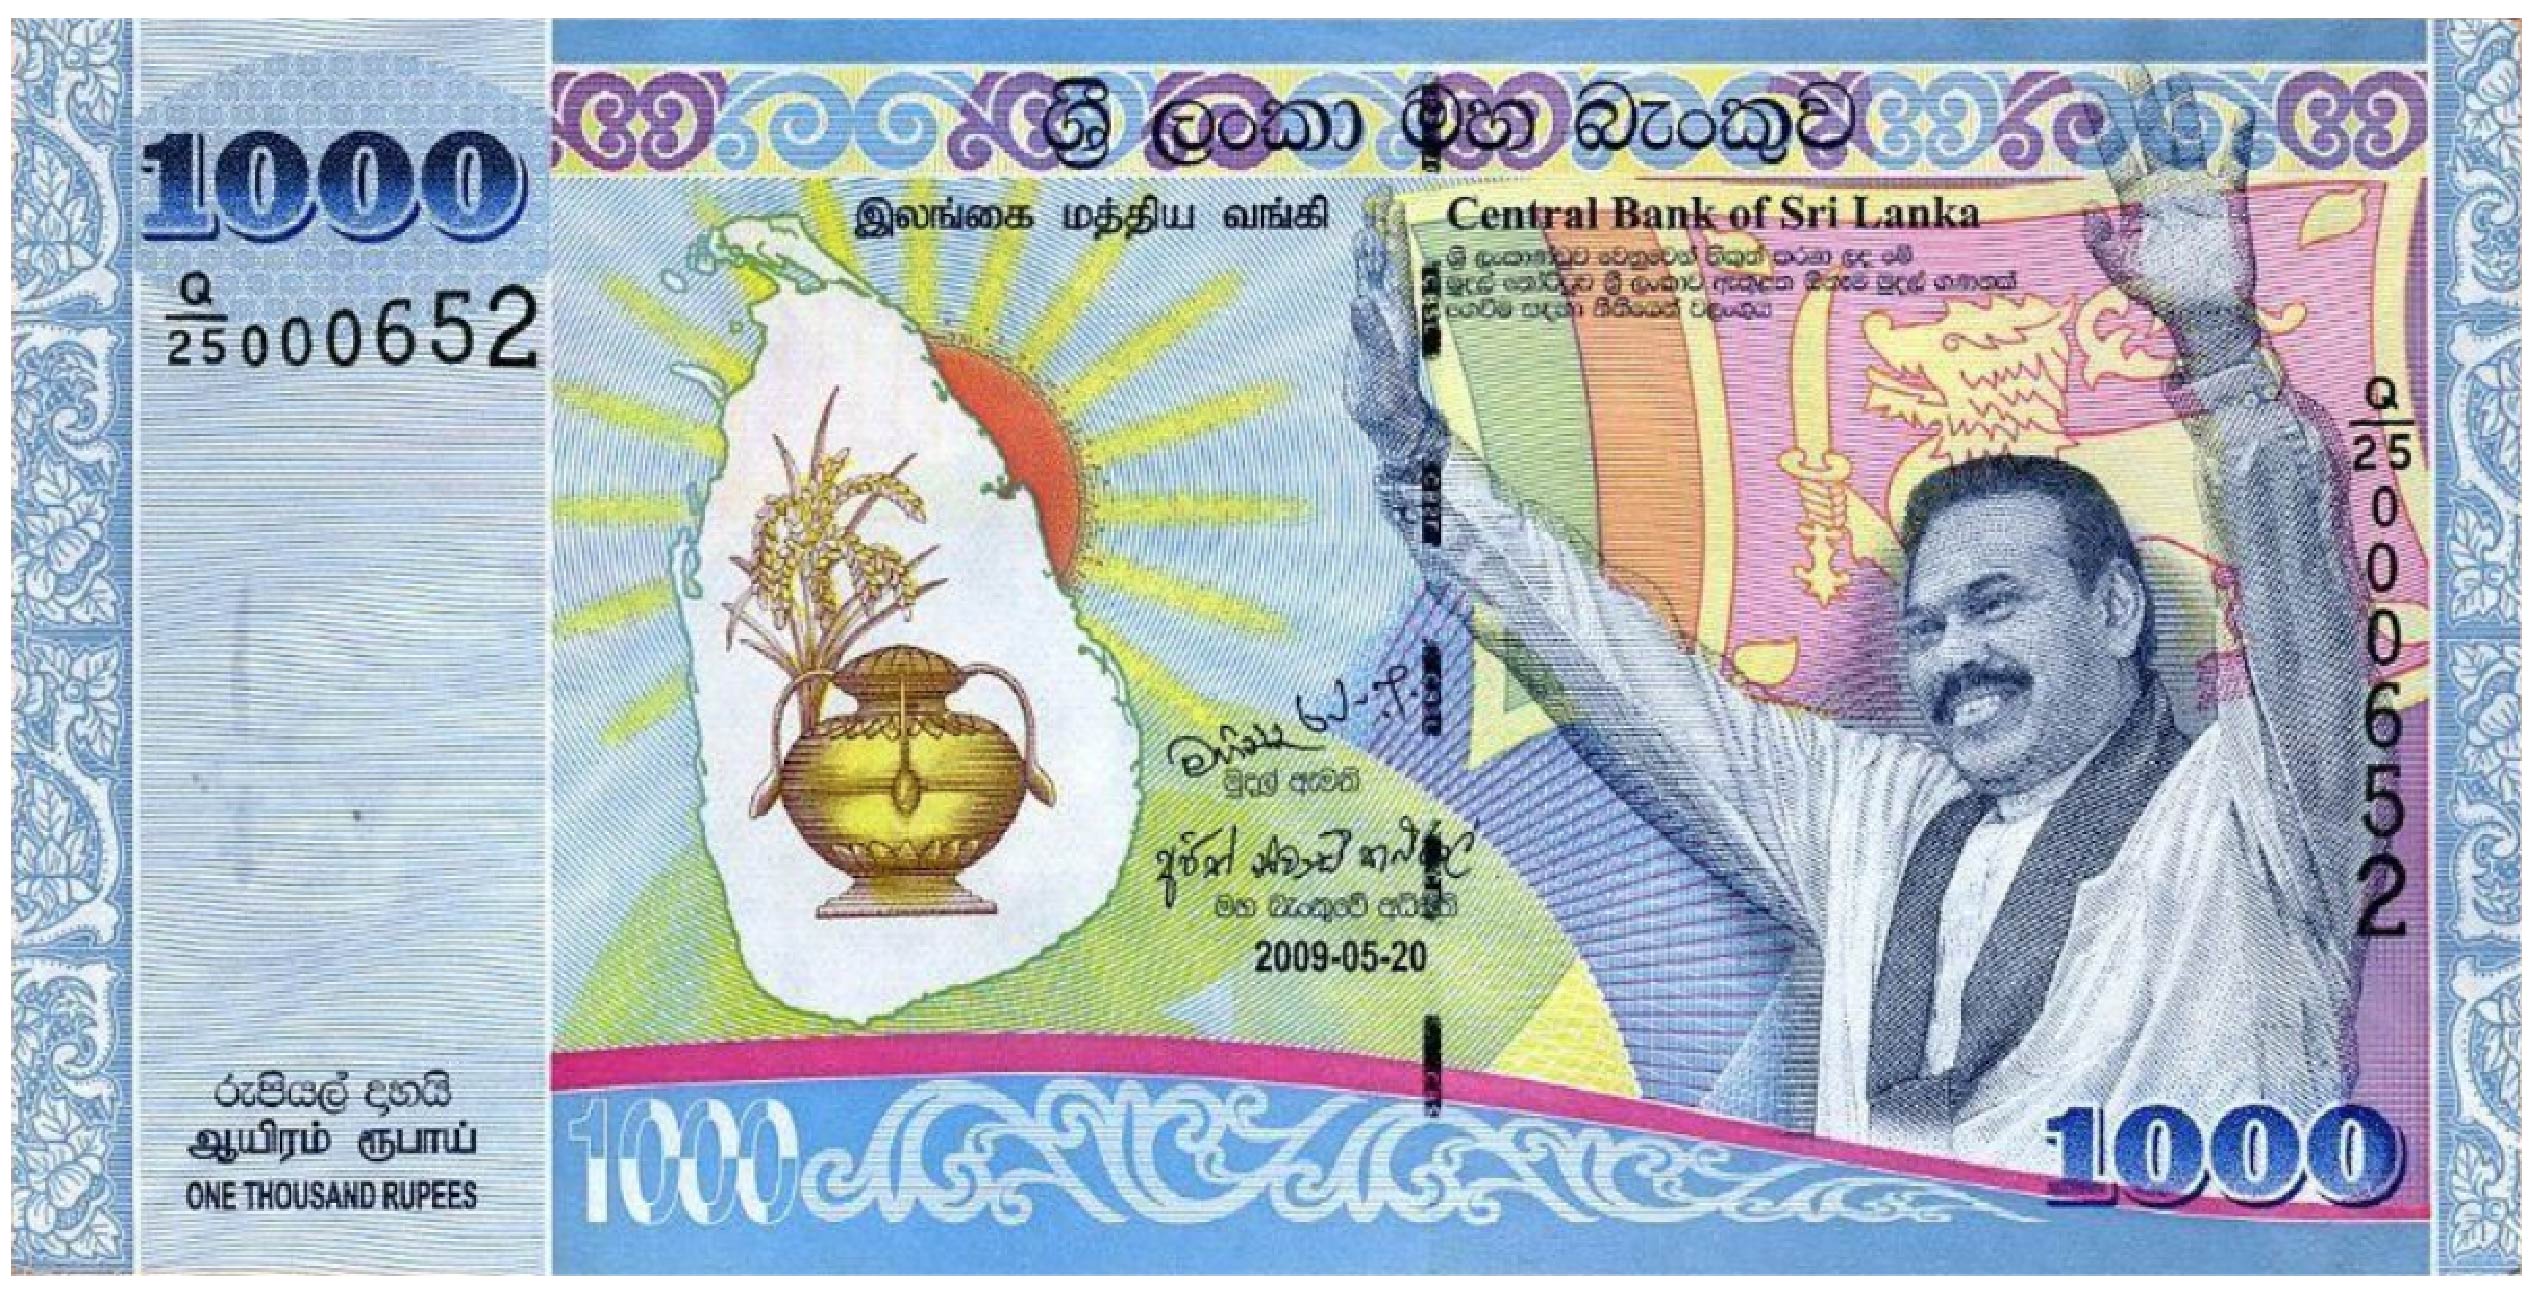 Sri lanka forex trading